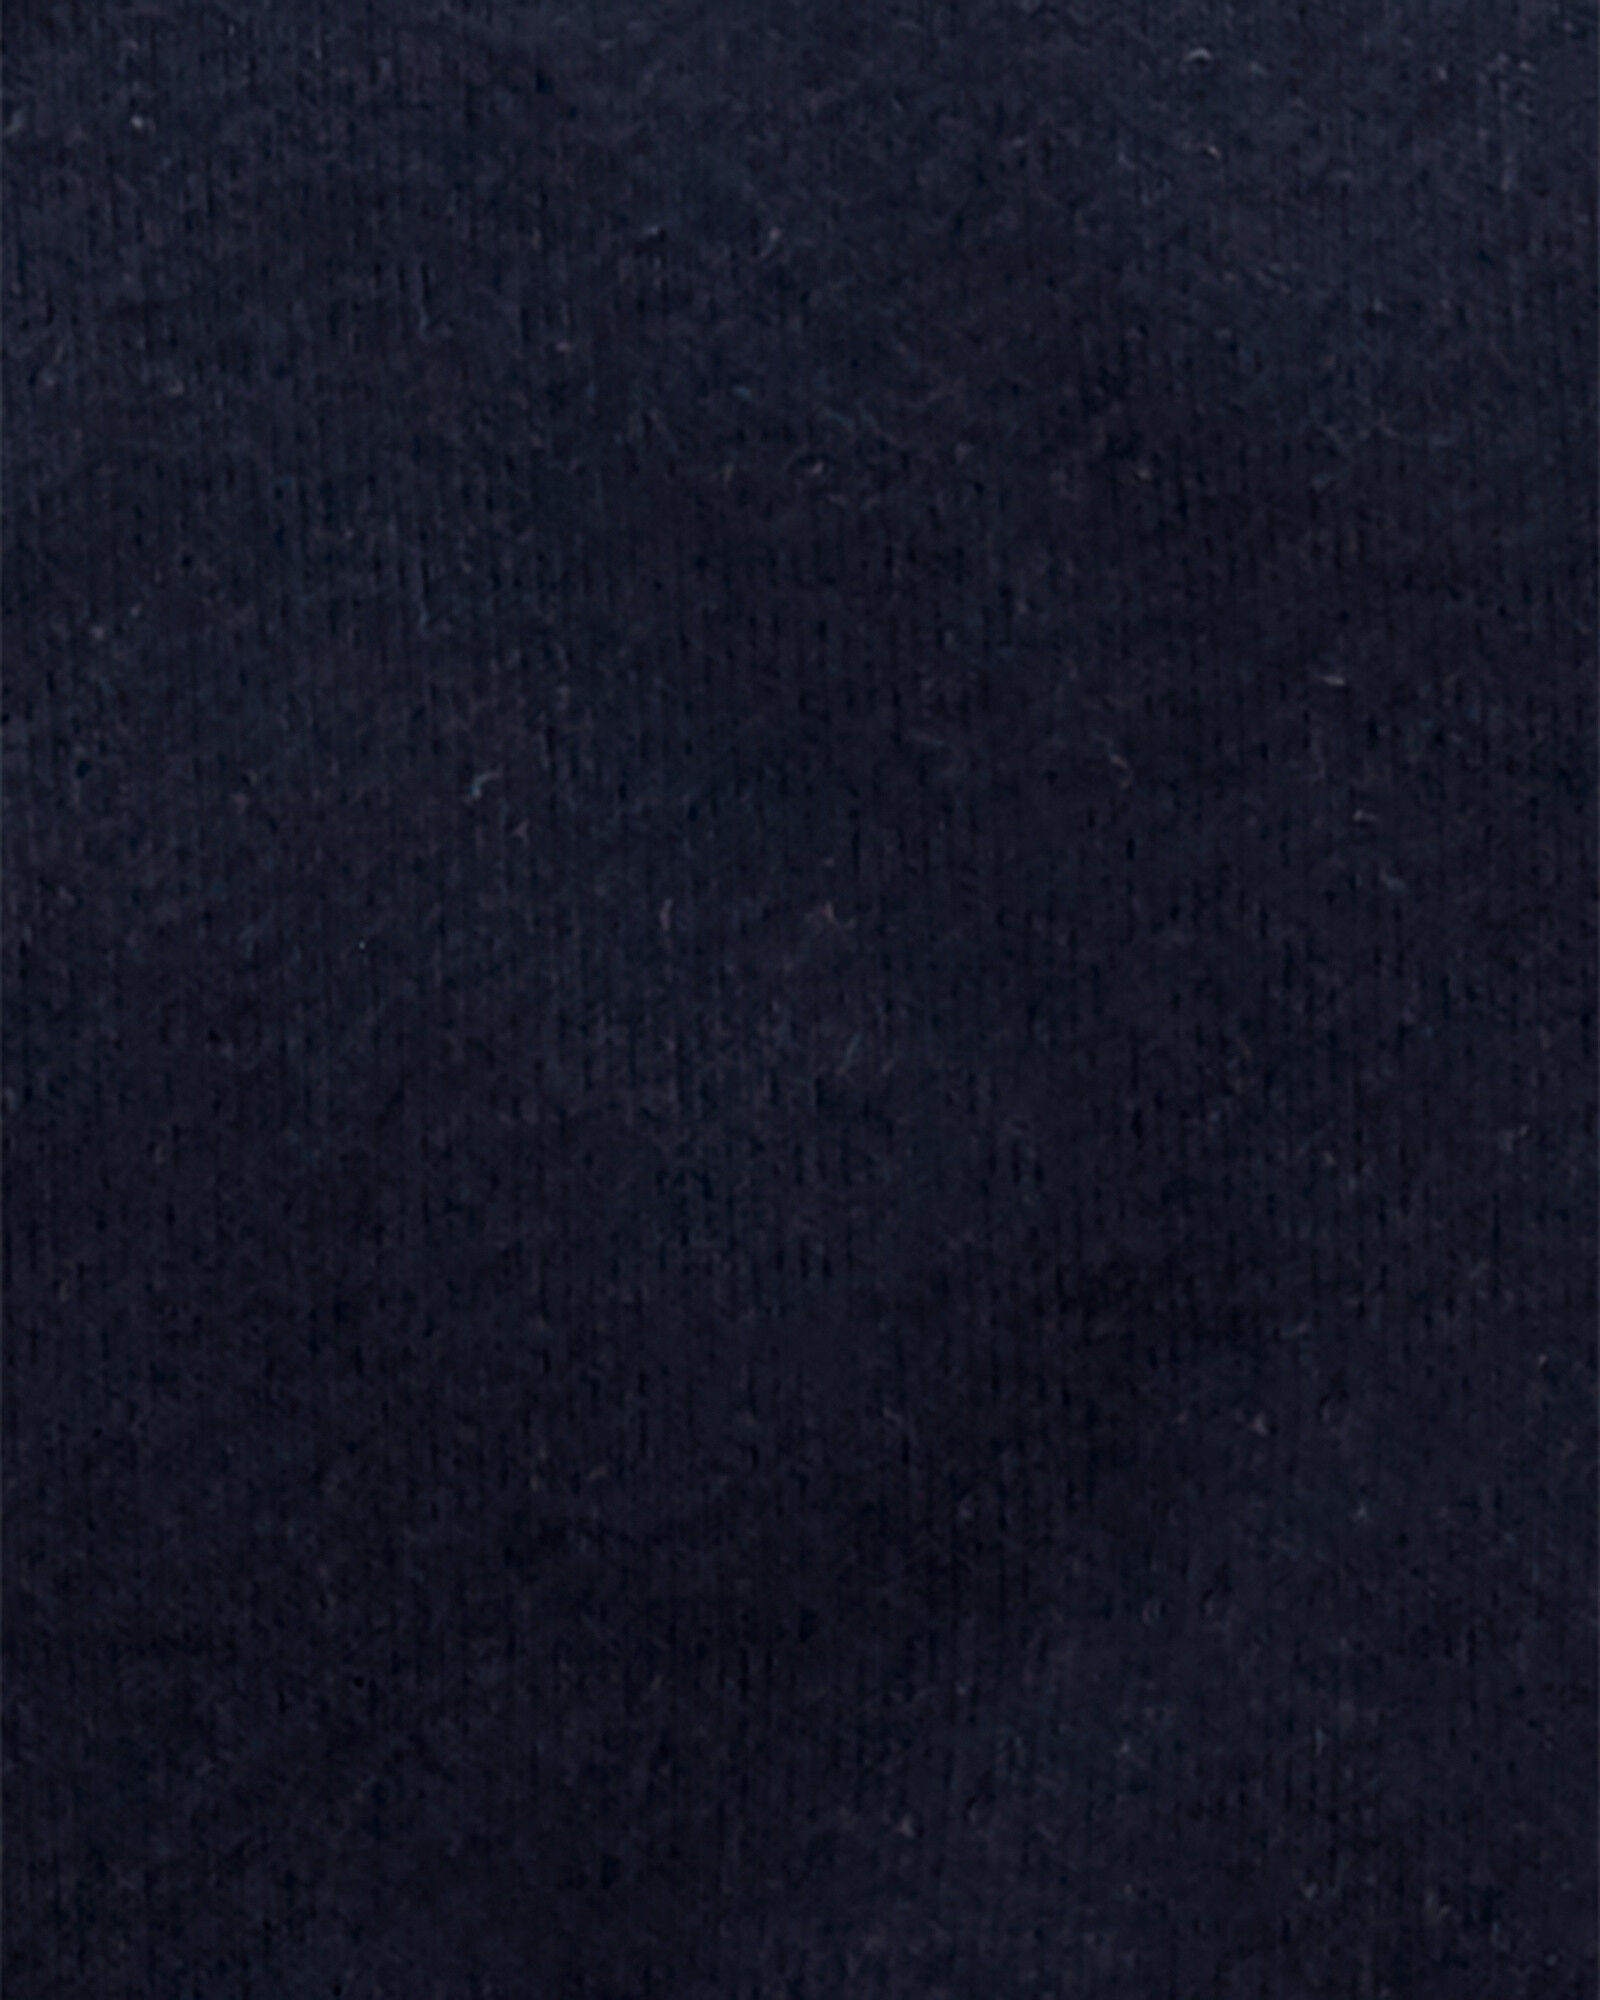 Pack cuatro batitas de algodón manga larga con broches laterales . Talles PRE-3M Sin color